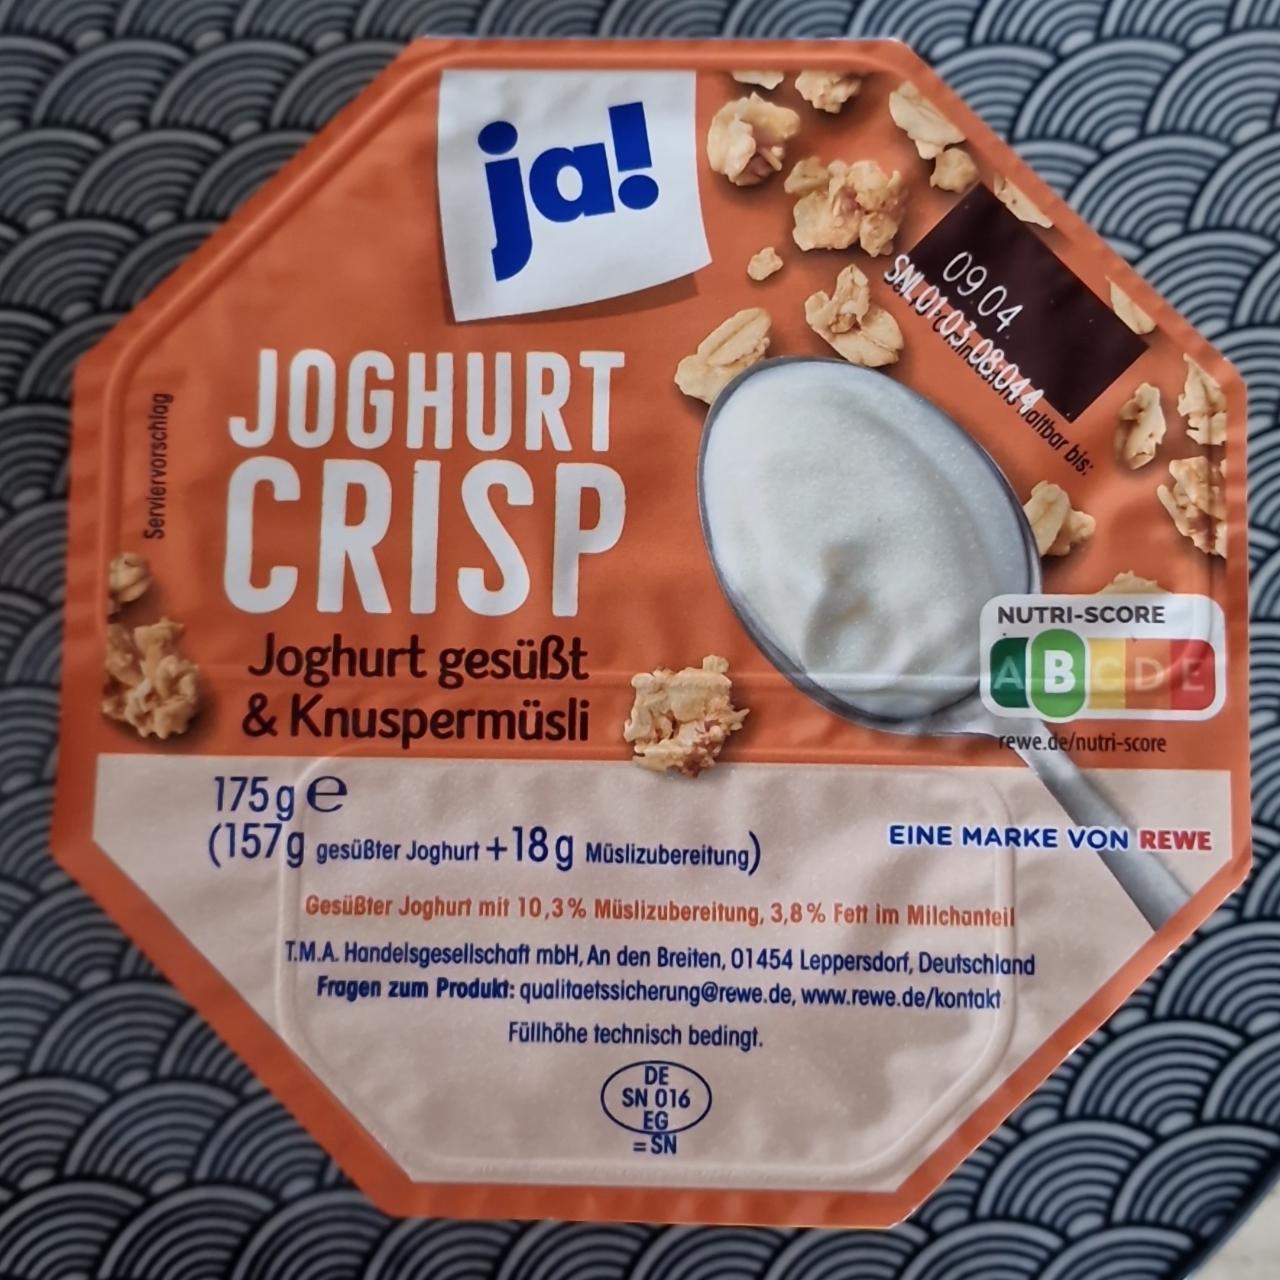 Fotografie - Joghurt Crisp Joghurt gesüßt & Knuspermüsli Ja!